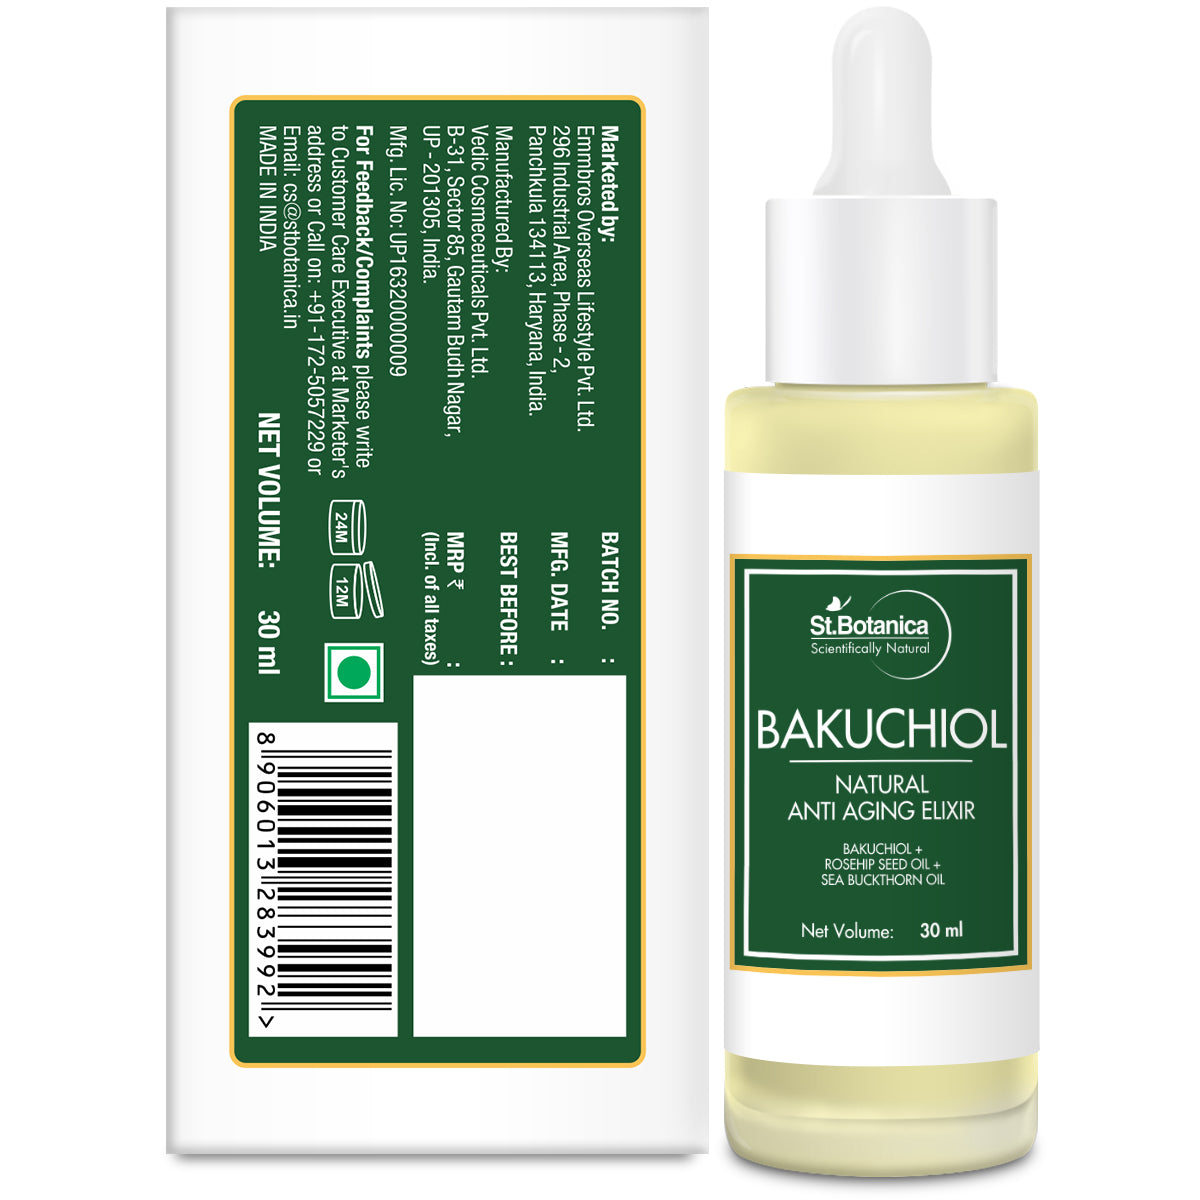 StBotania Bakuchiol Face Oil Natural Anti Aging Elixir With Rosehip Seed Oil, Sea Buckthorn Oil, Marula Oil, 30 ml